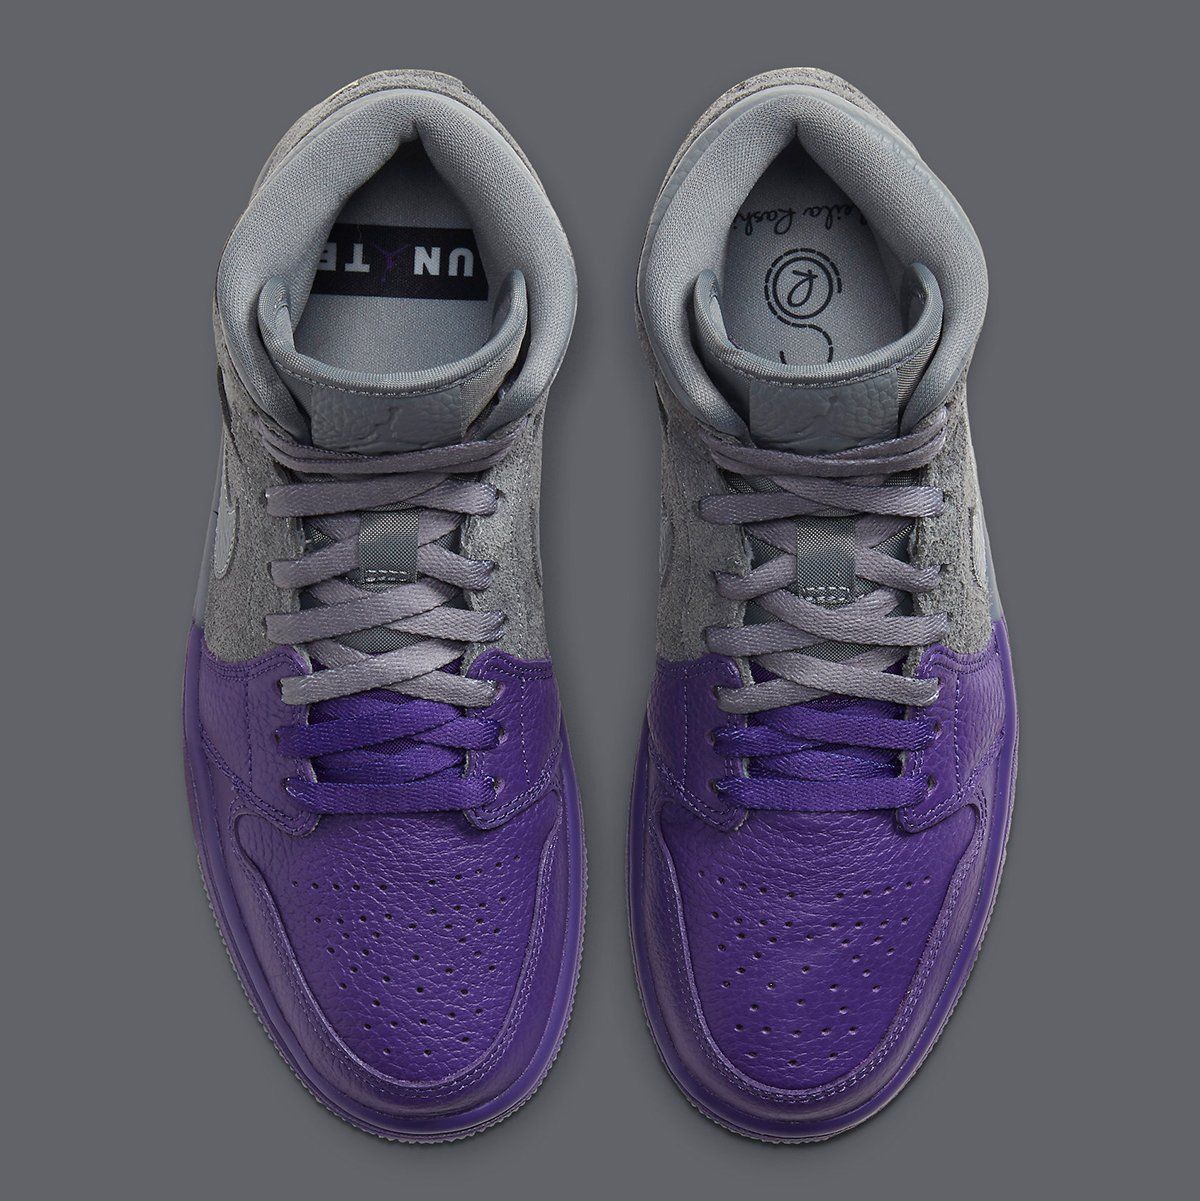 jordans purple and grey